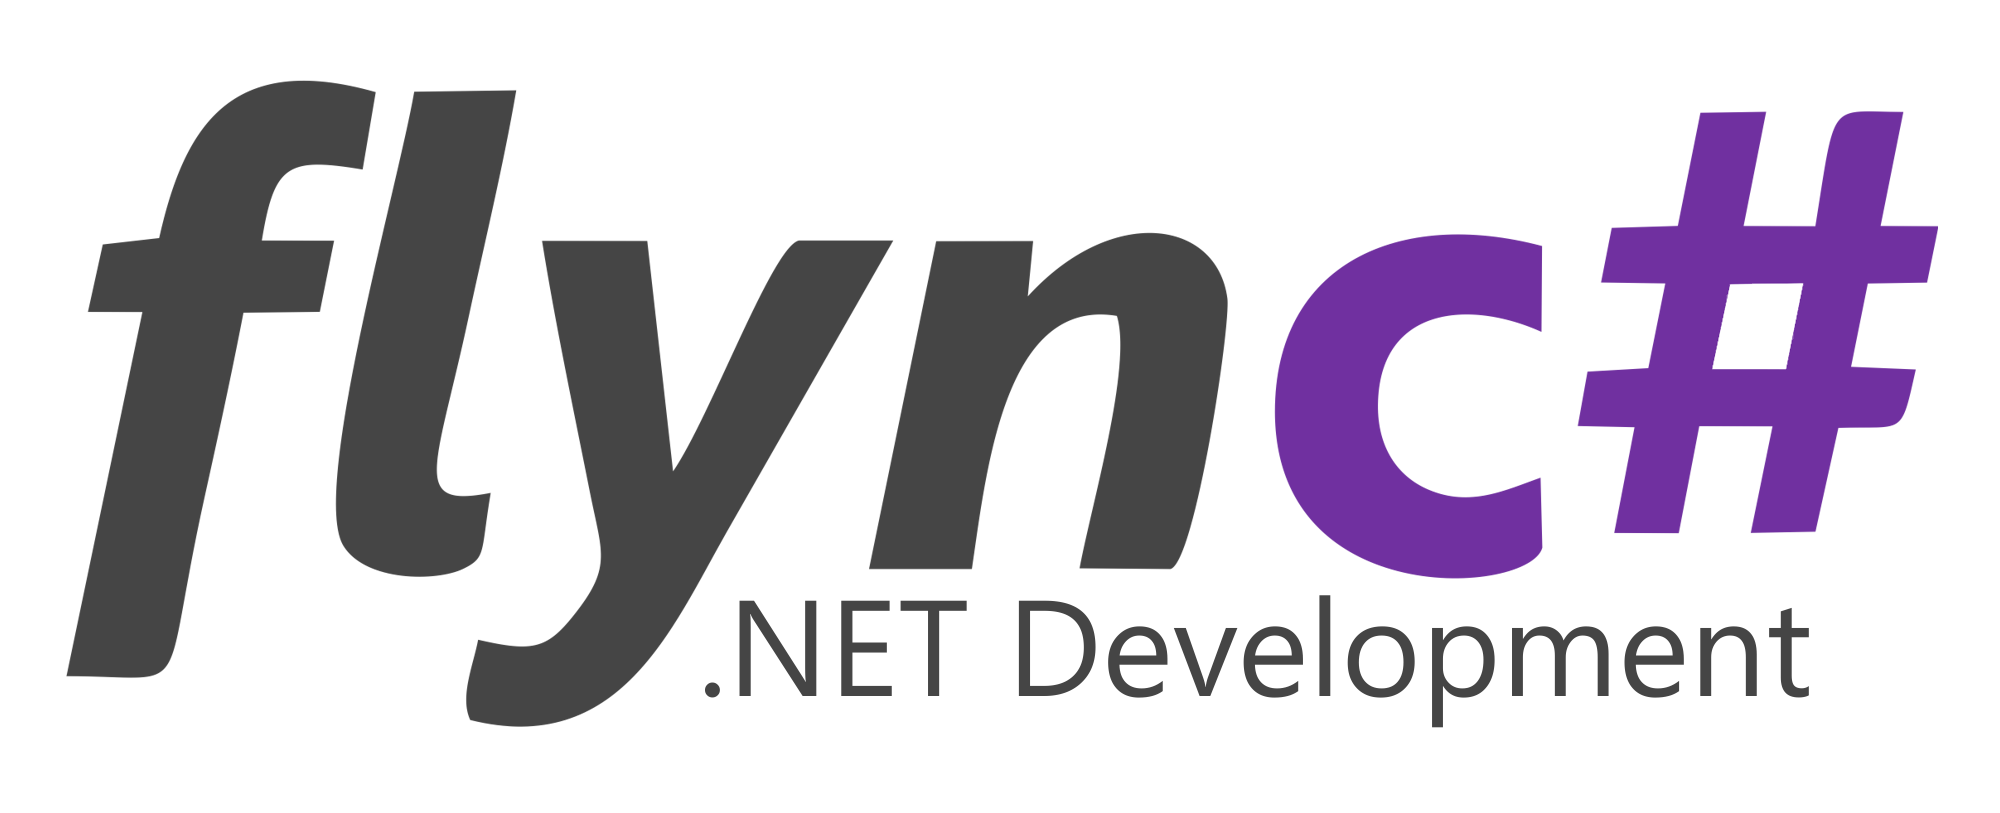 Flync logo